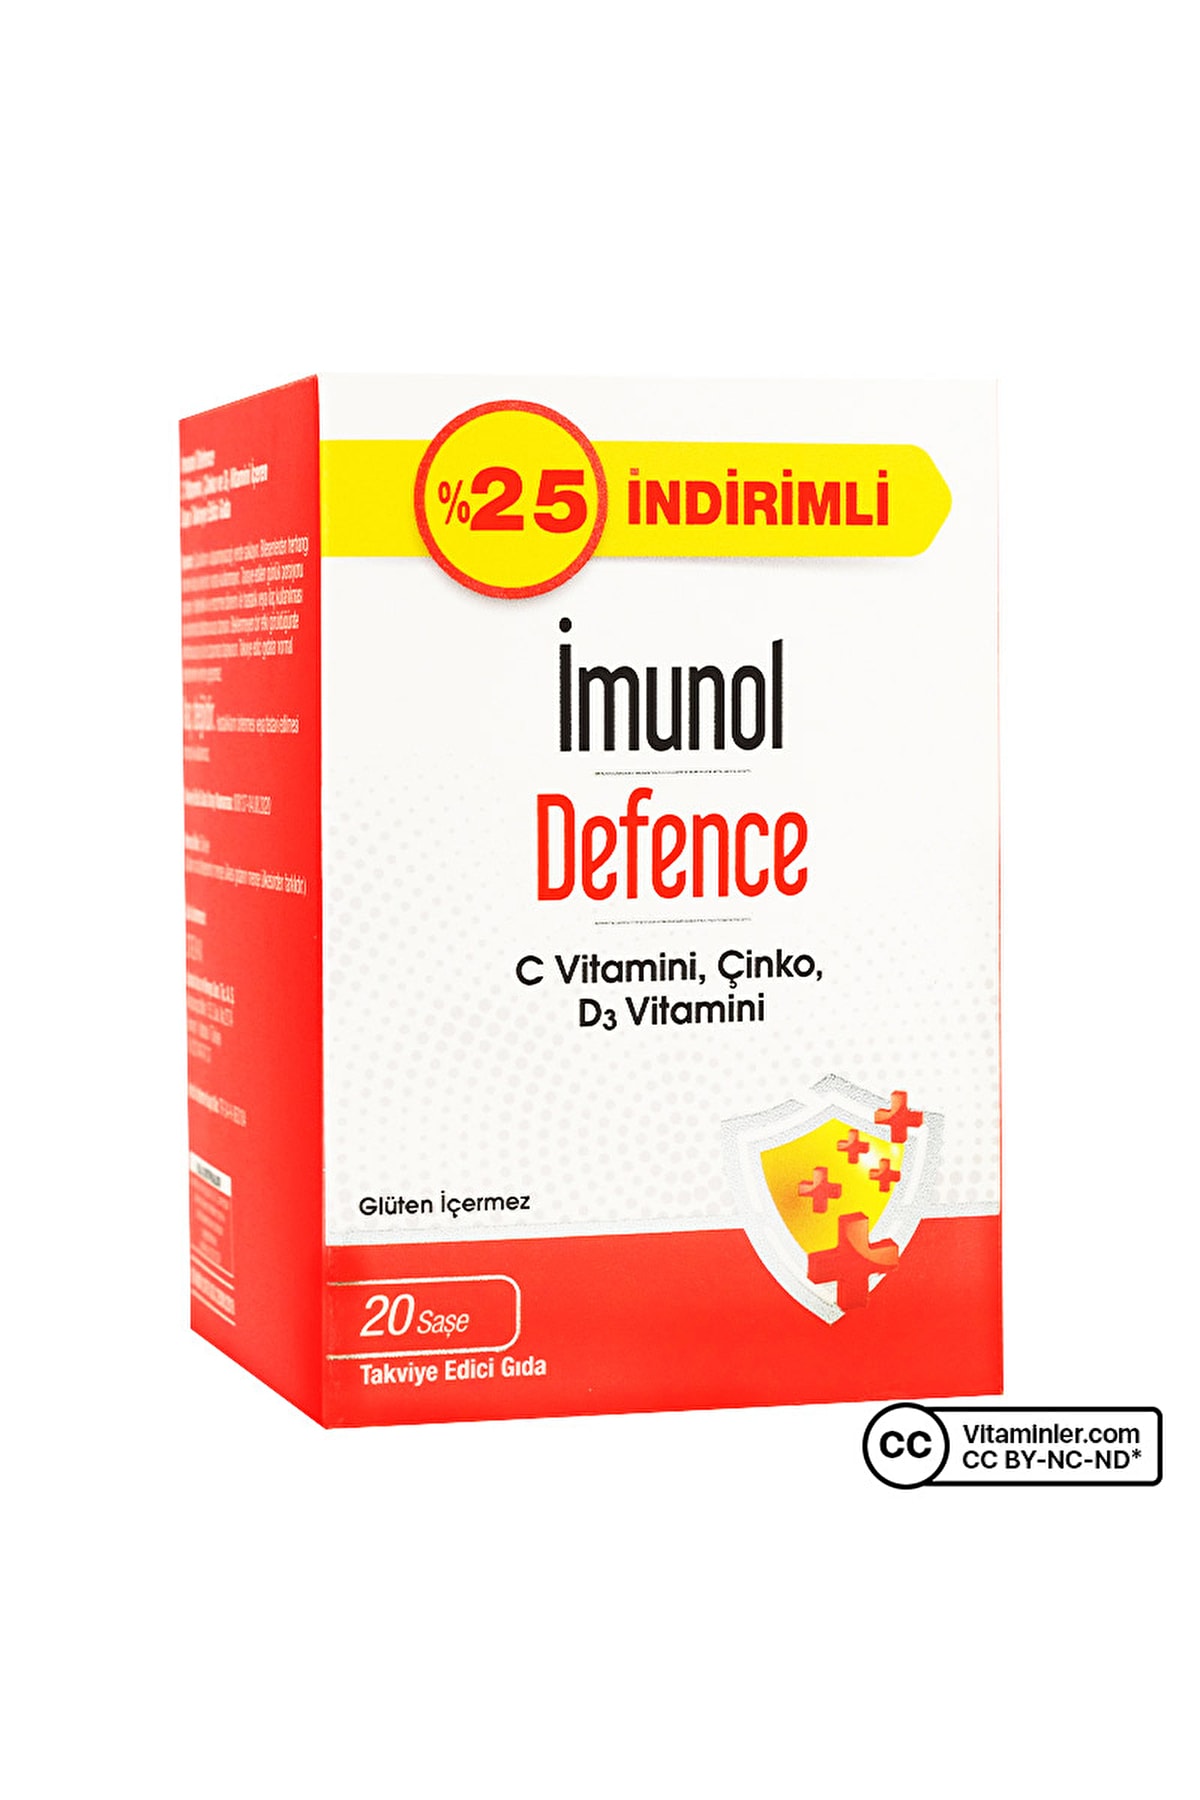 İMUNOL Orzax Imunol Defence 20 Saşe